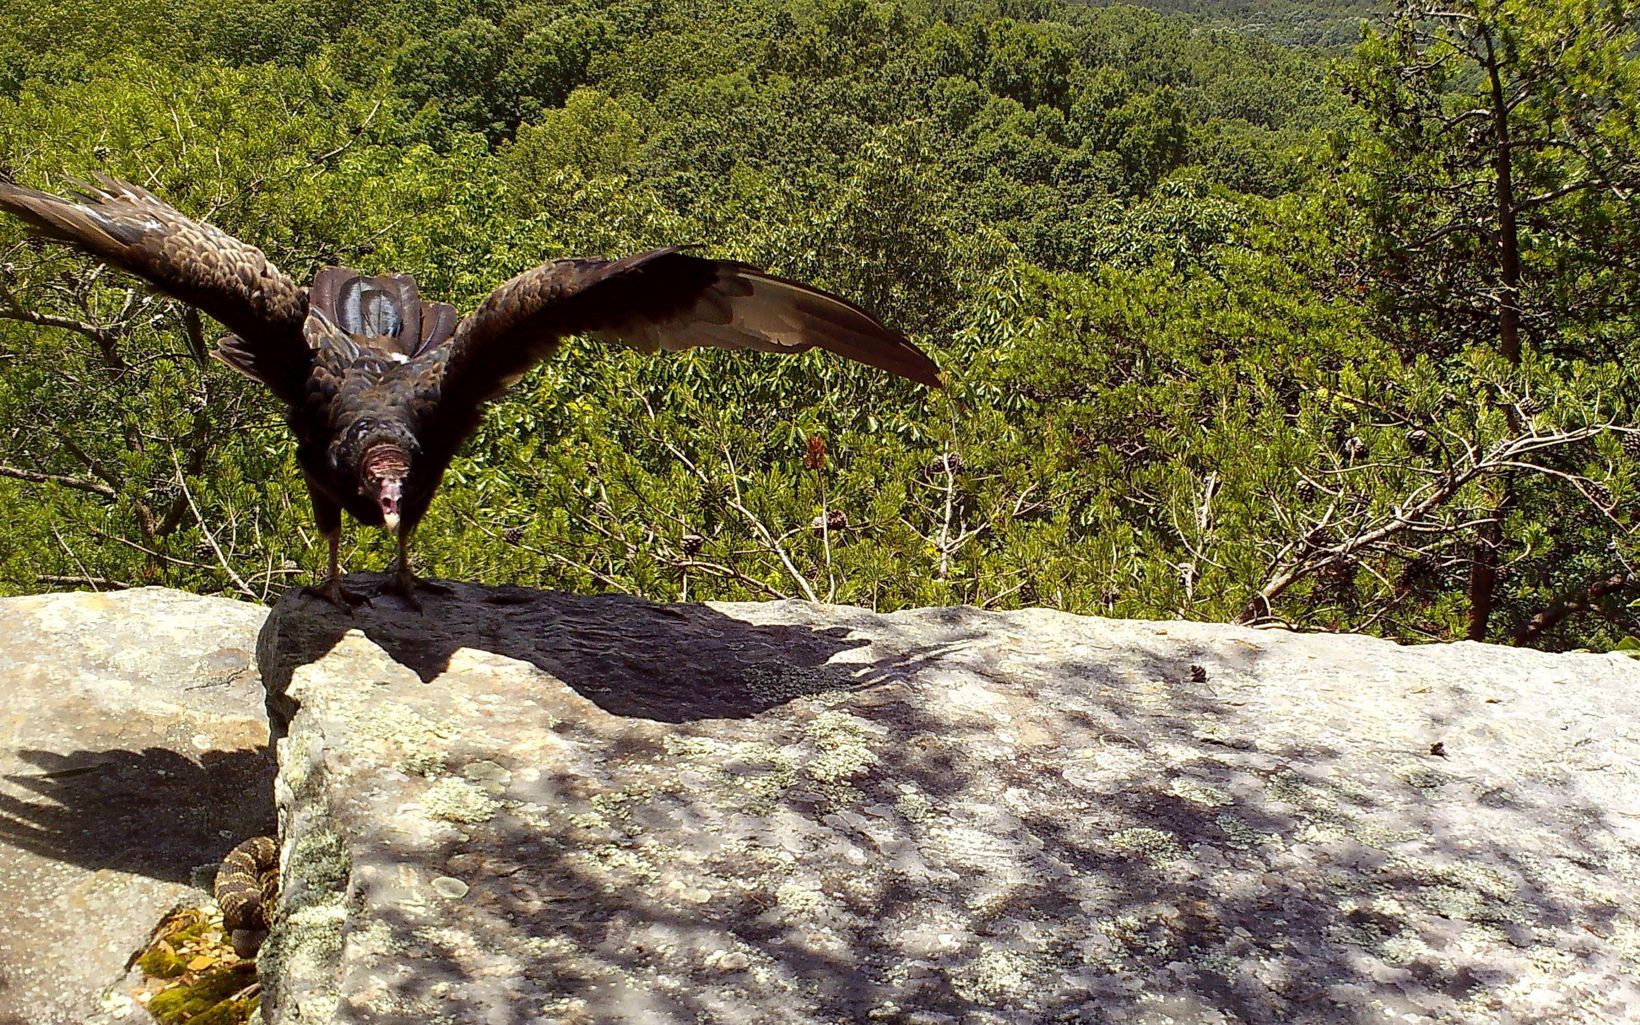 A large bird lands on a rock.